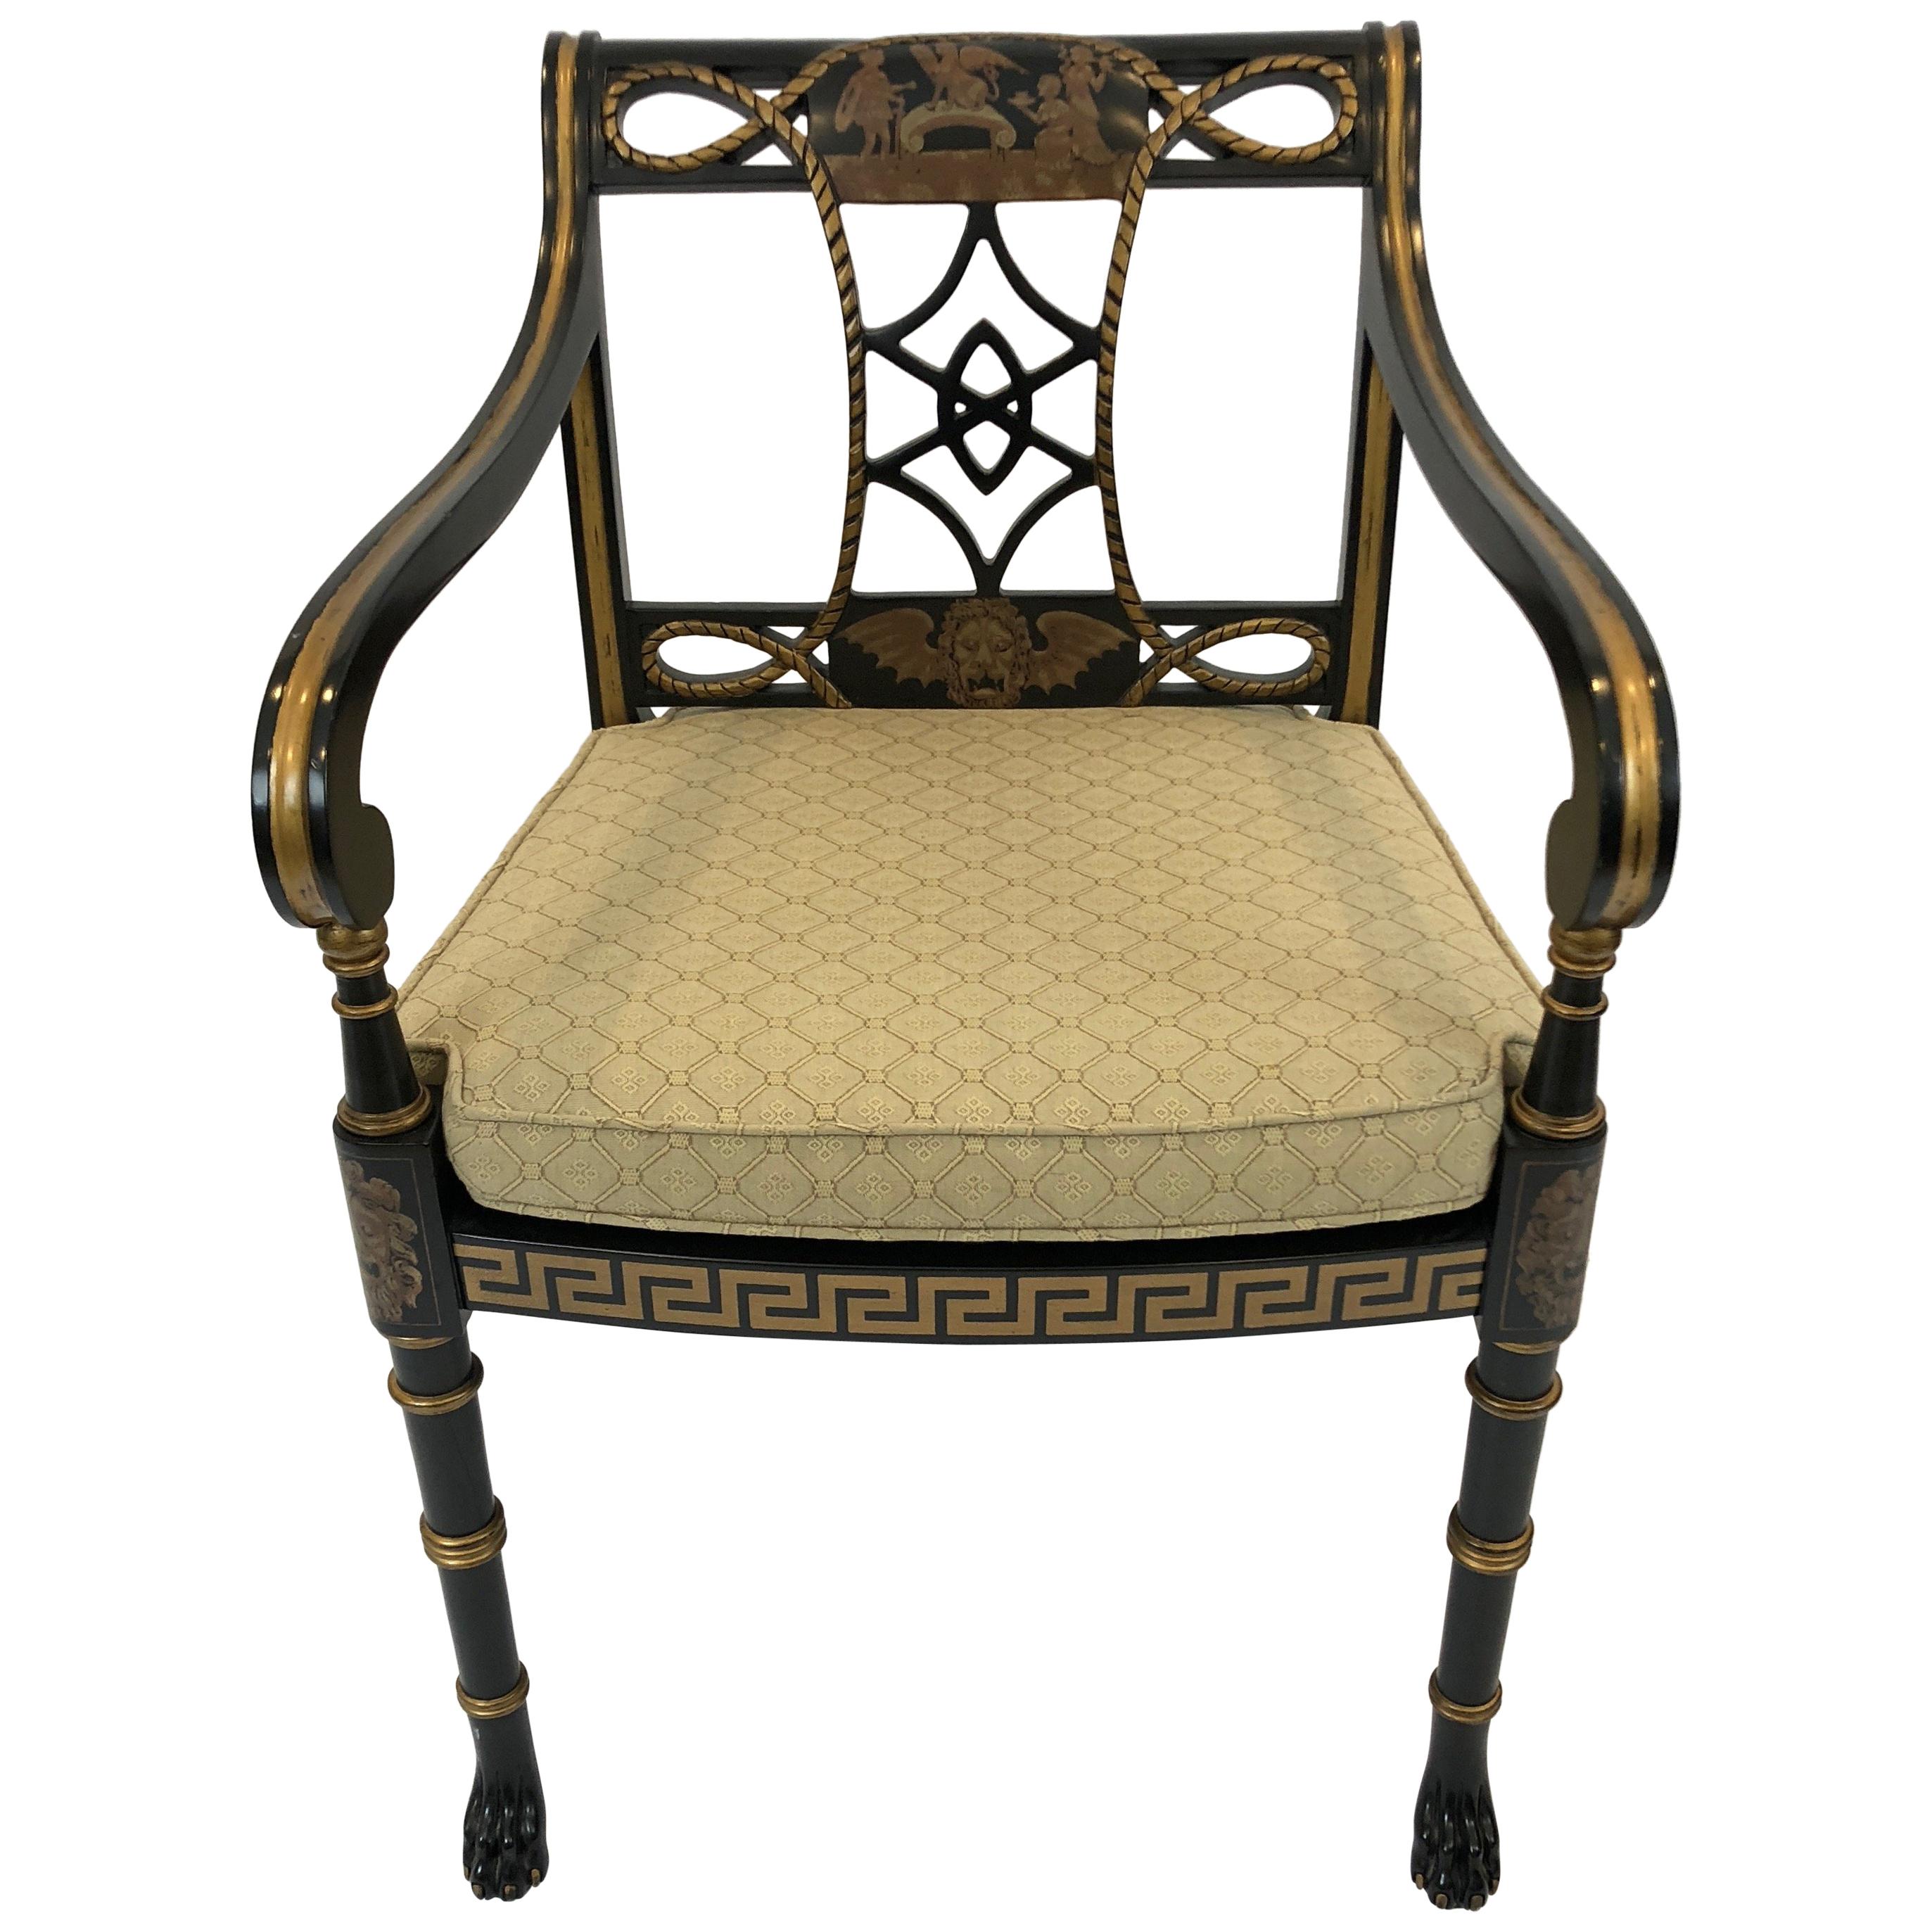 Sensational Greek Key Motif Regency Style Arm Chair Club Chair with Caned Seat